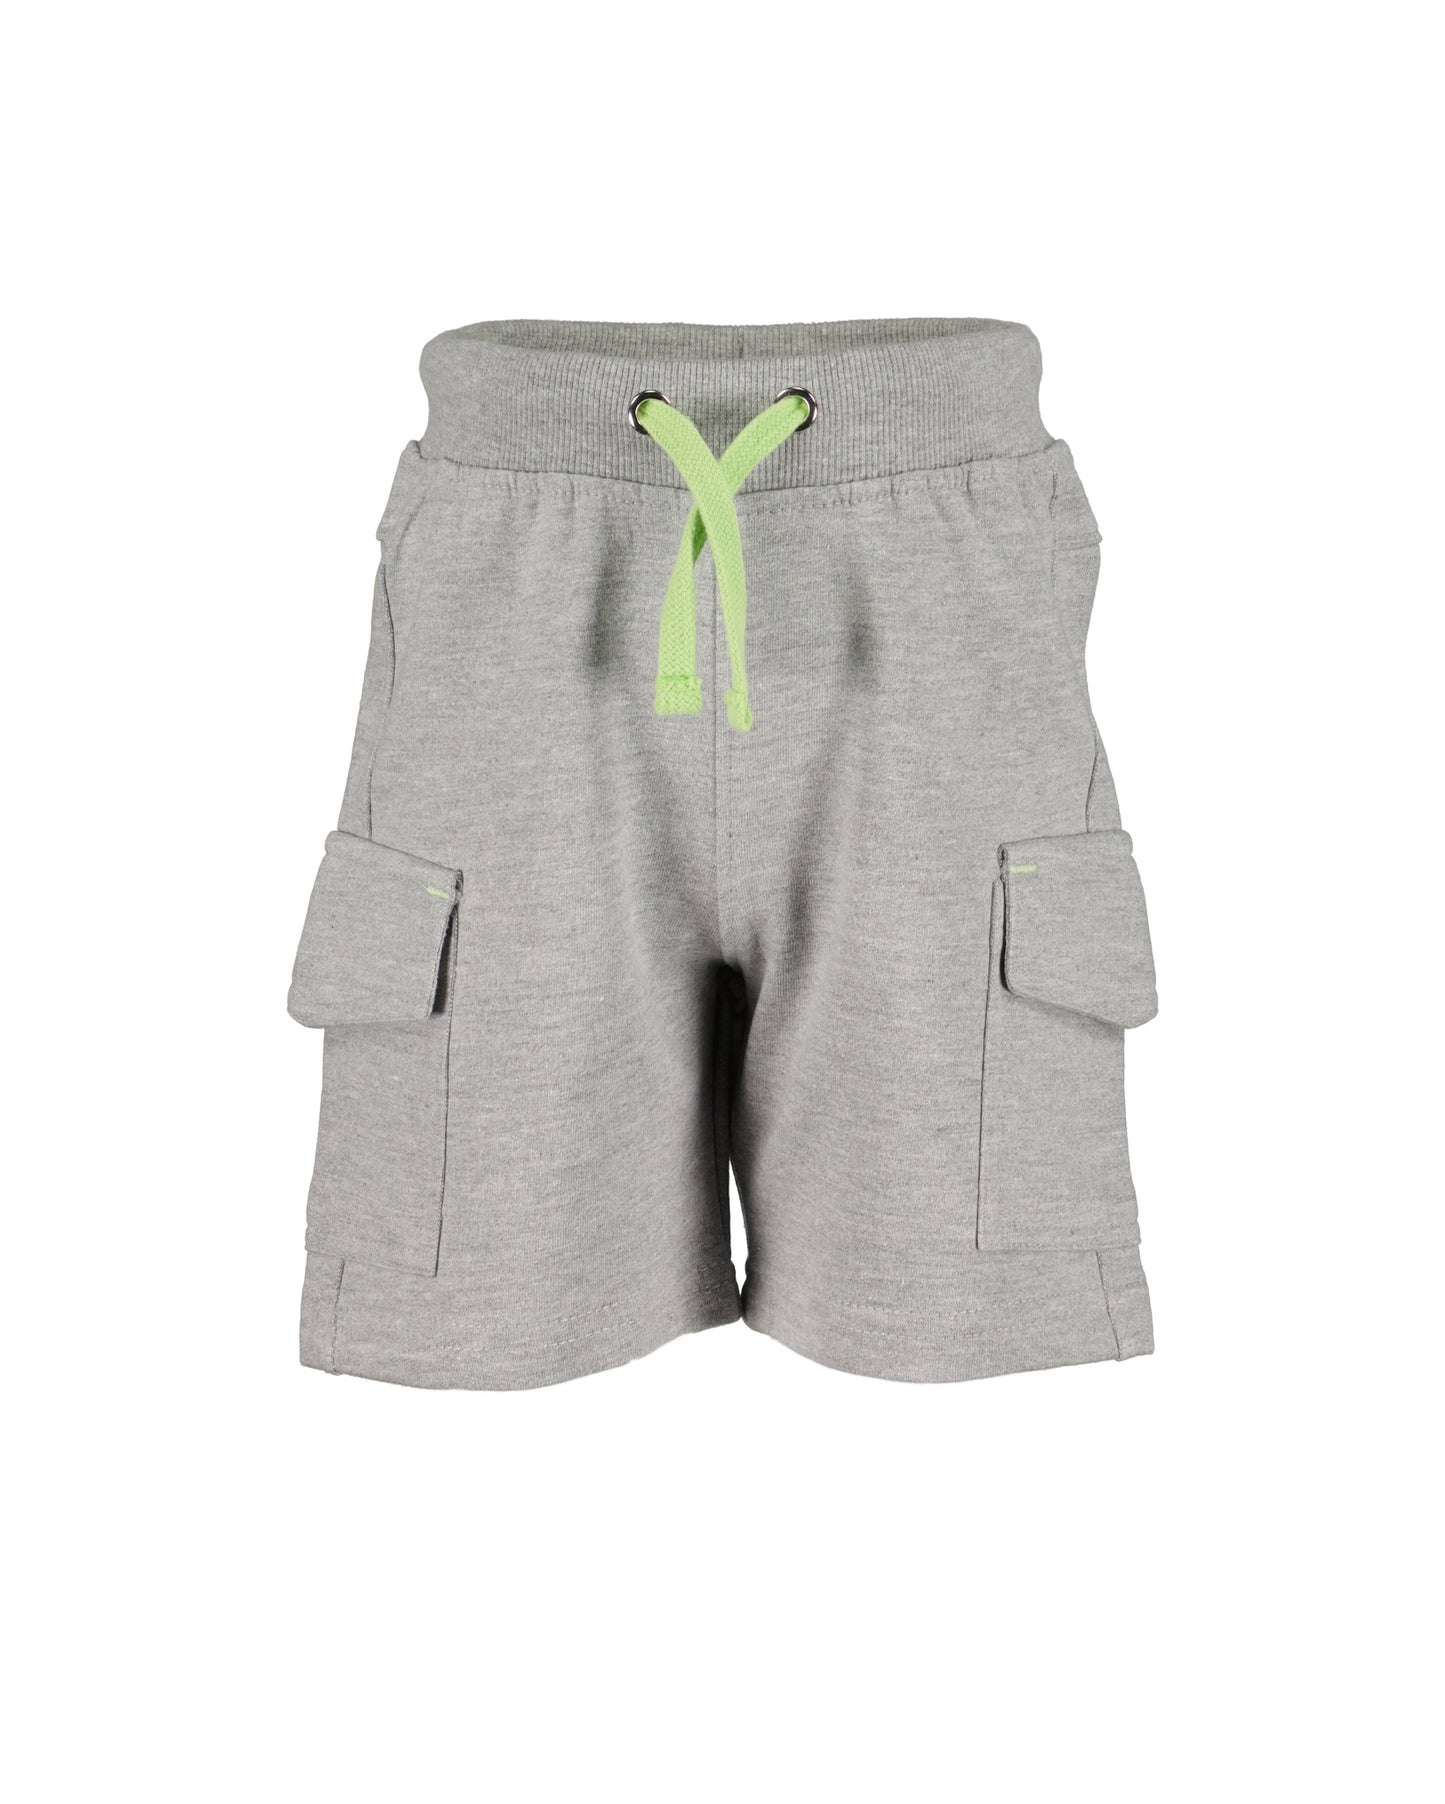 Boys pocket shorts - grey